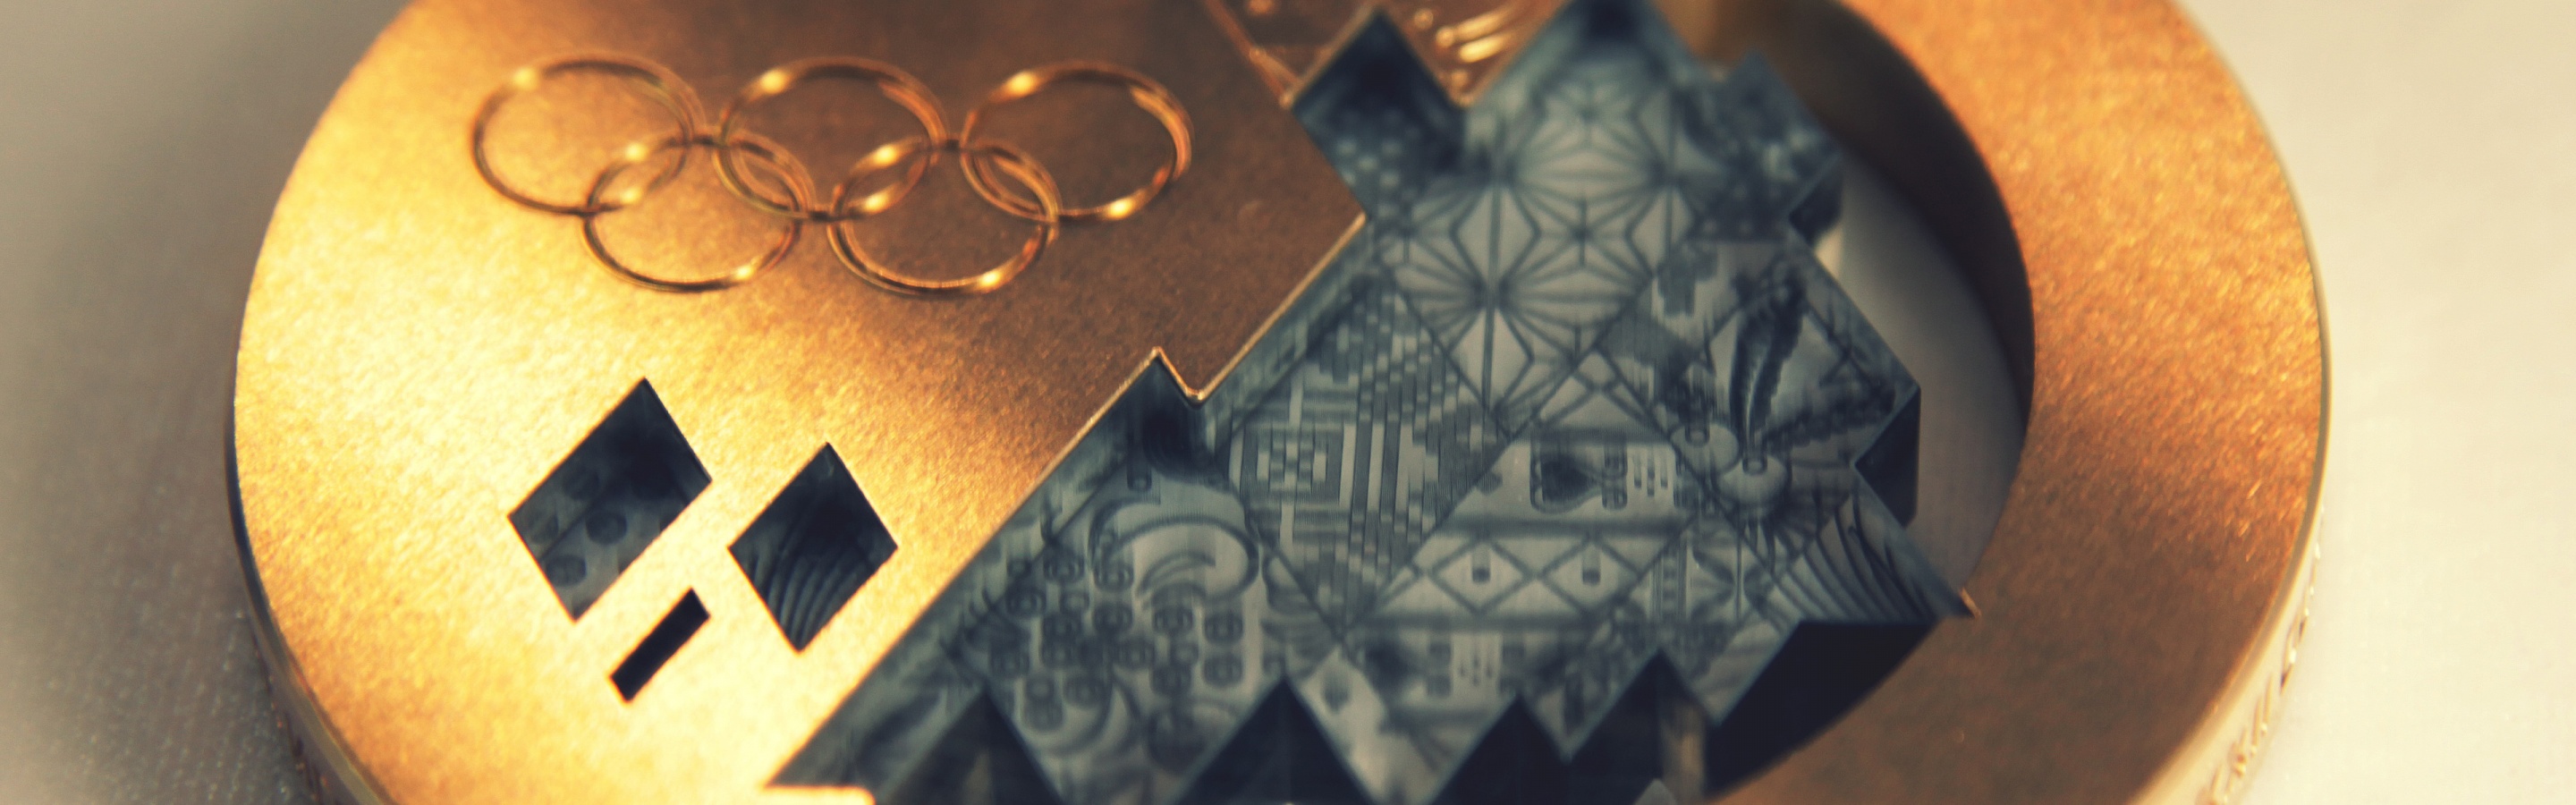 Olympics Gold Medal - Sochi 2014